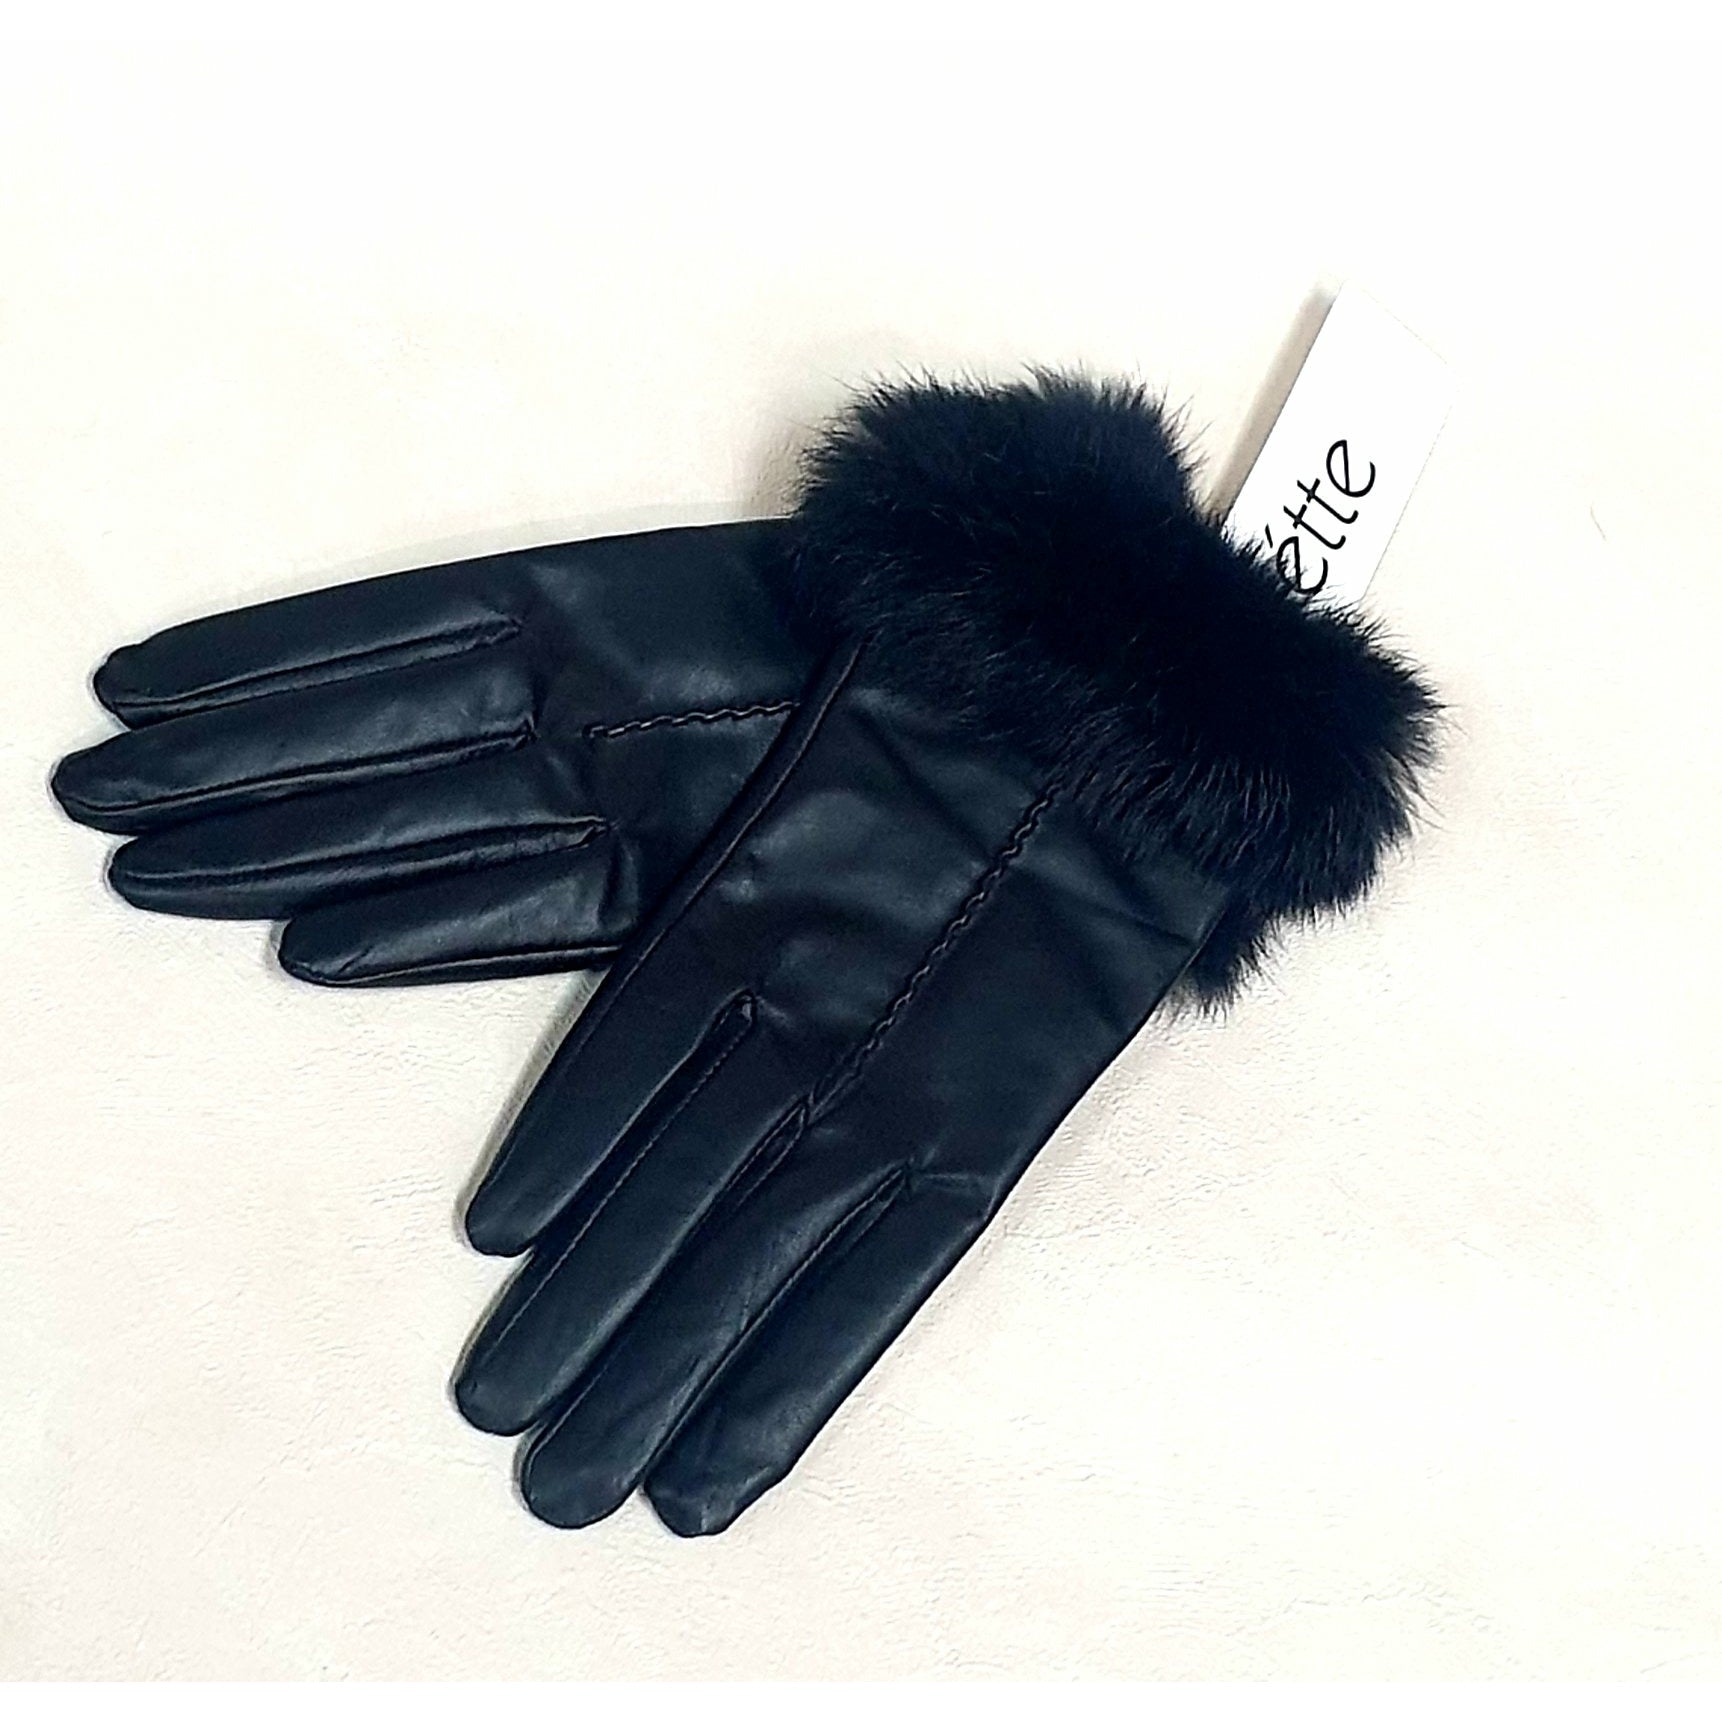 Leather Gloves - Rabbit Fur Trim -Black Size Medium Not specified